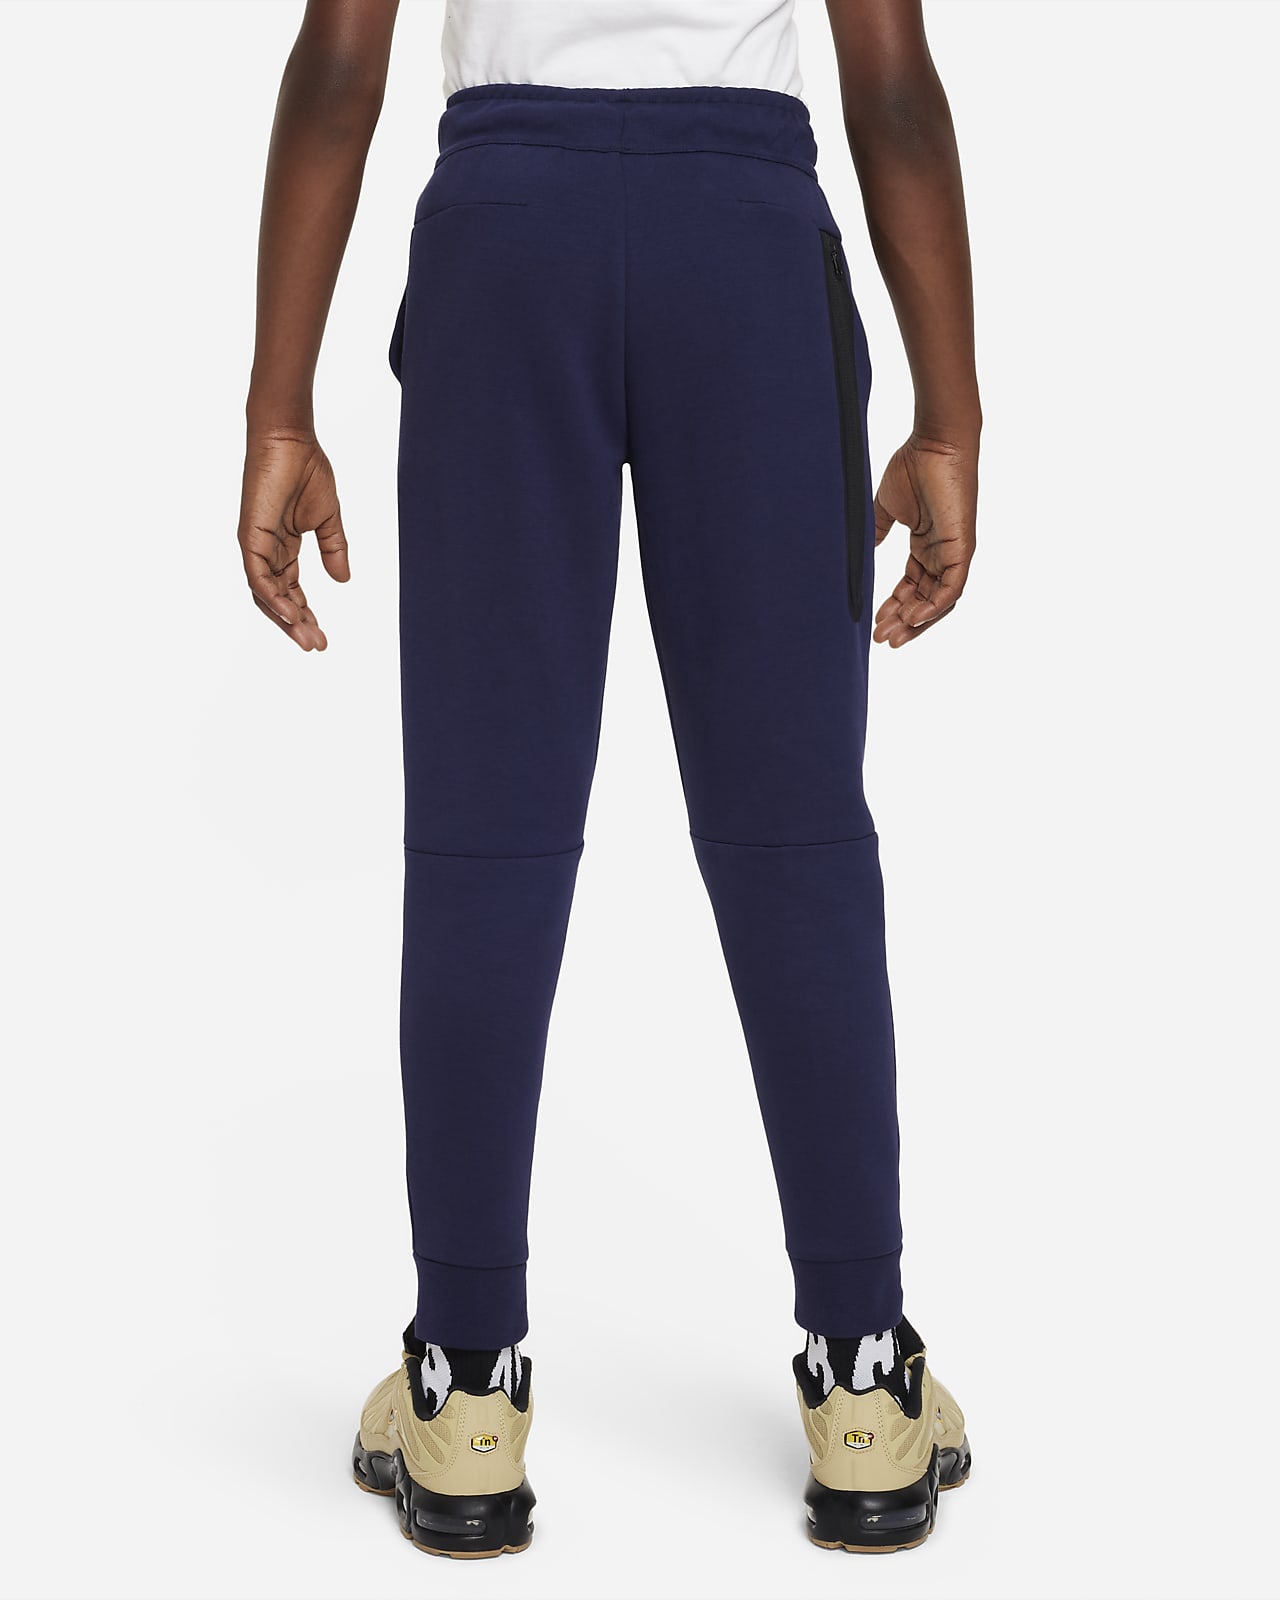 Boys' Nike Pants